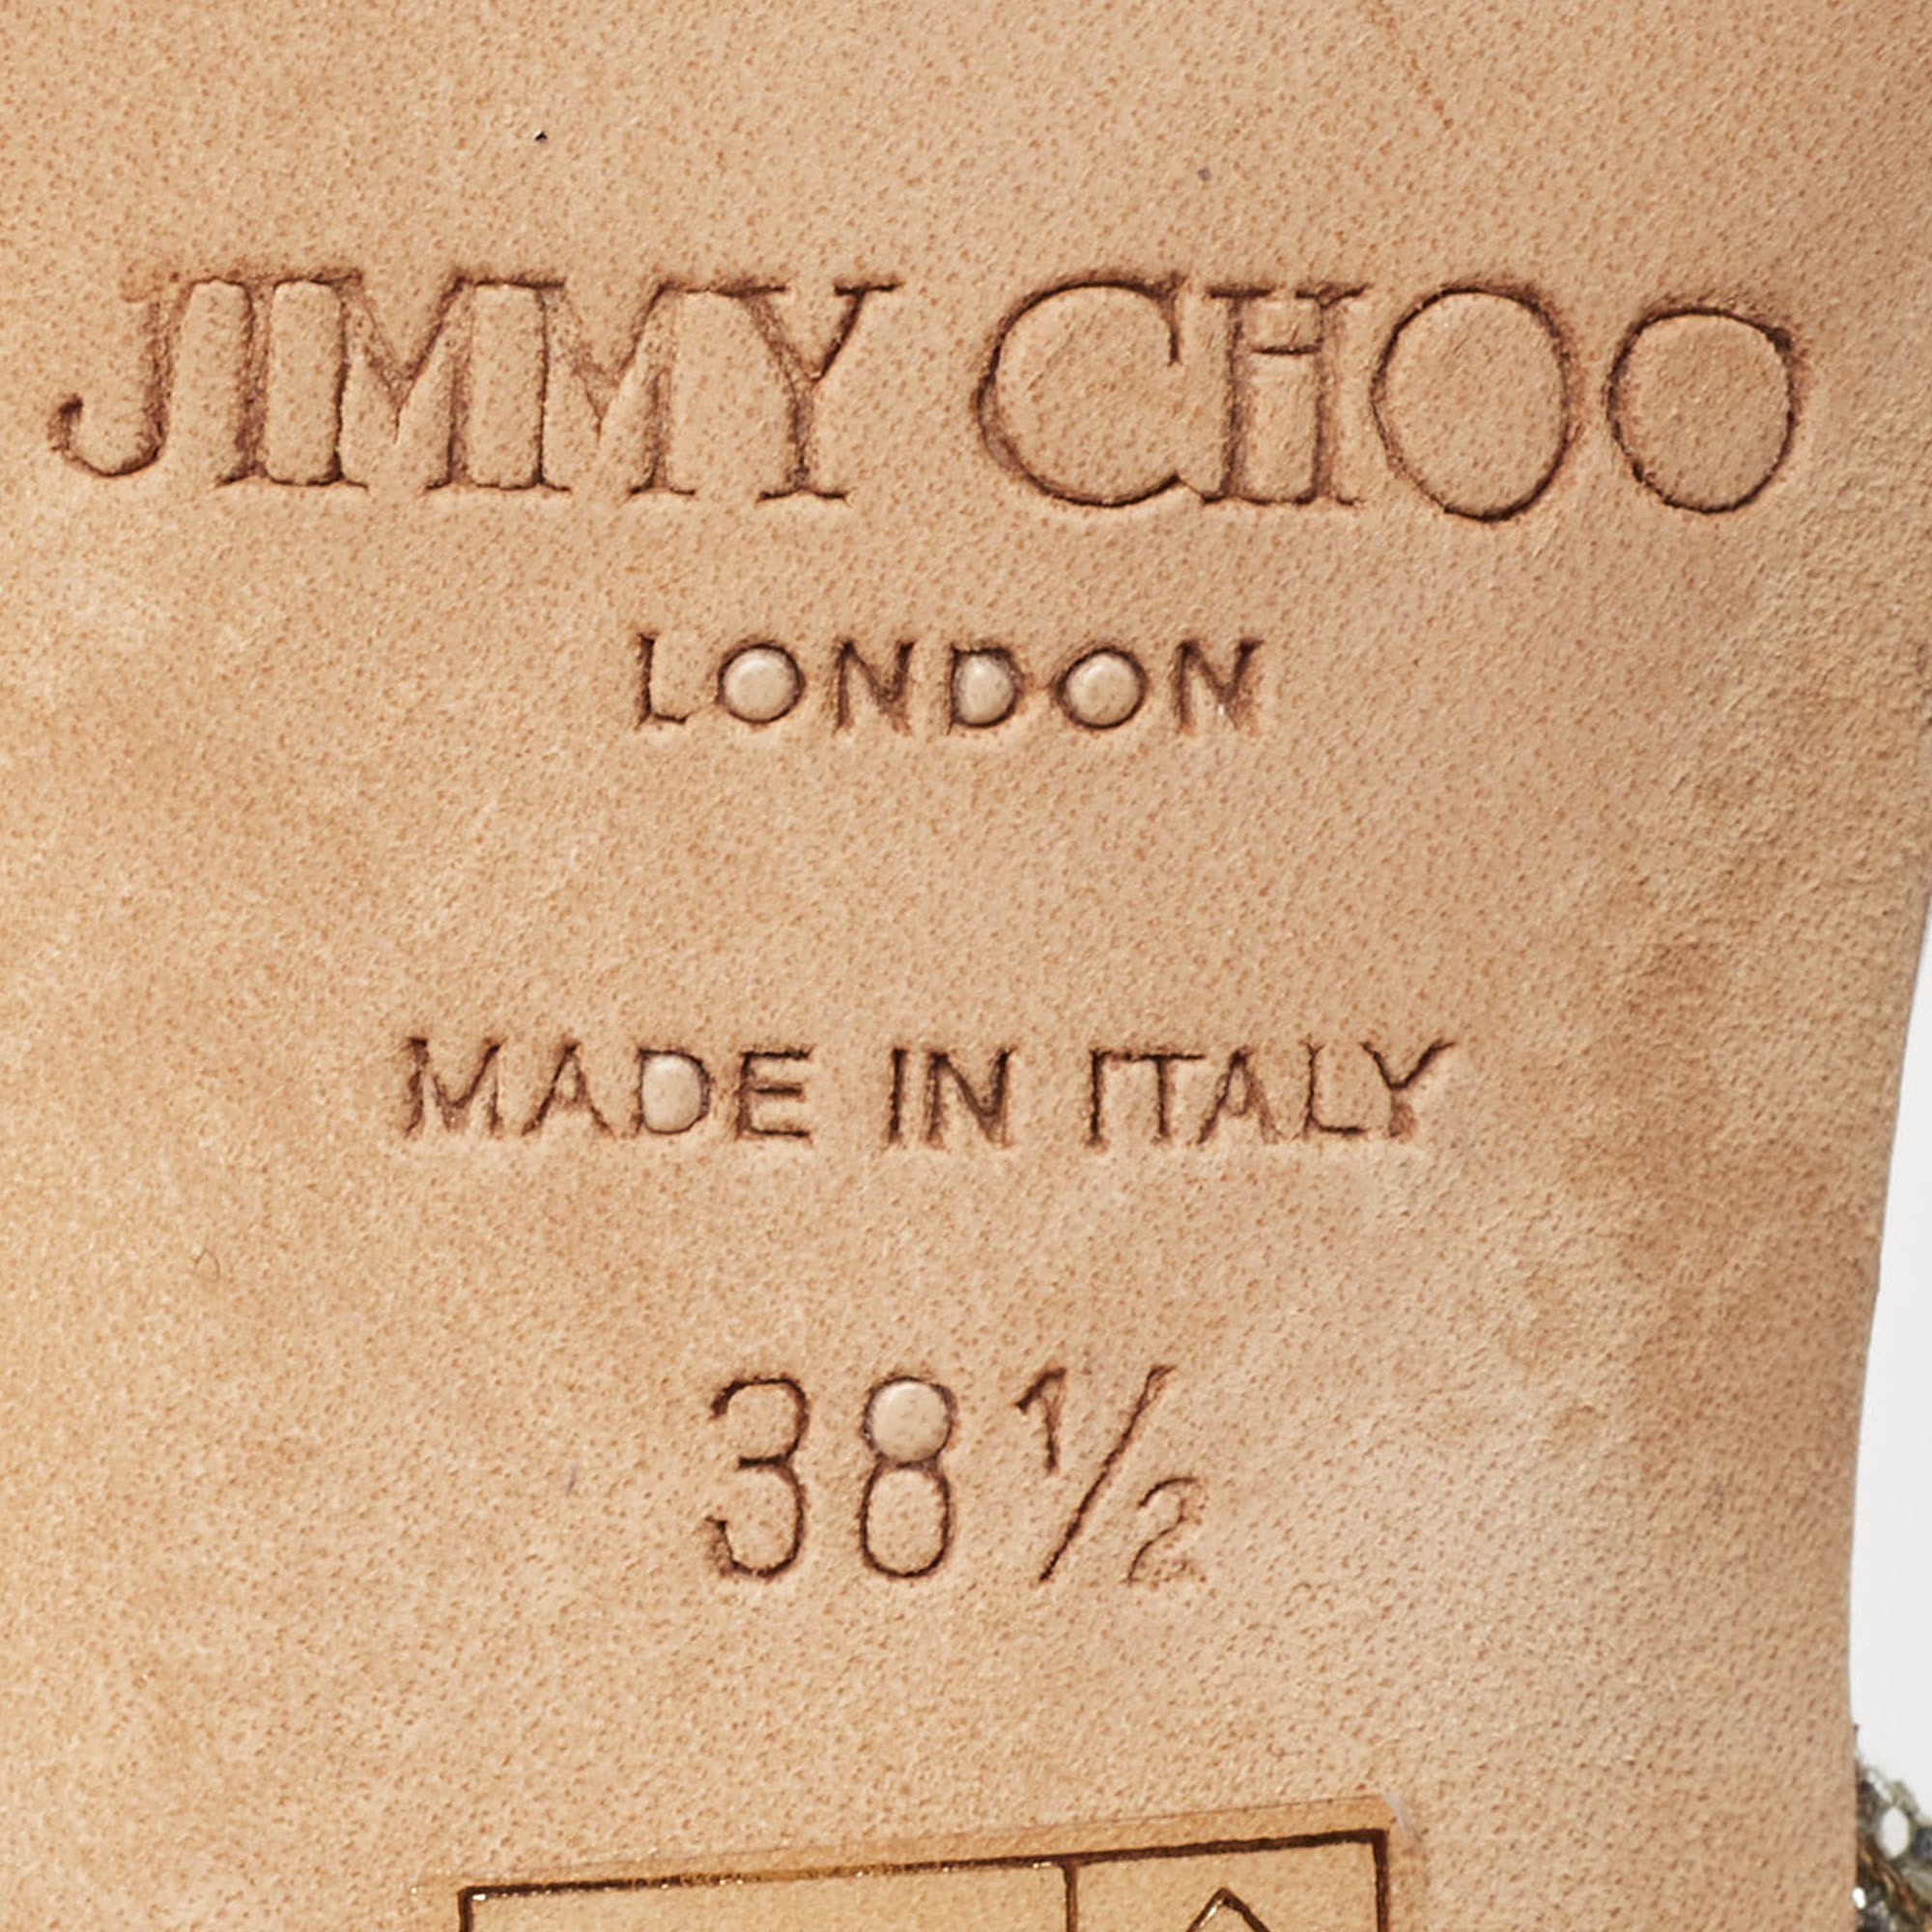 Jimmy Choo Silver Glitter India Slingback Sandals Size 38.5